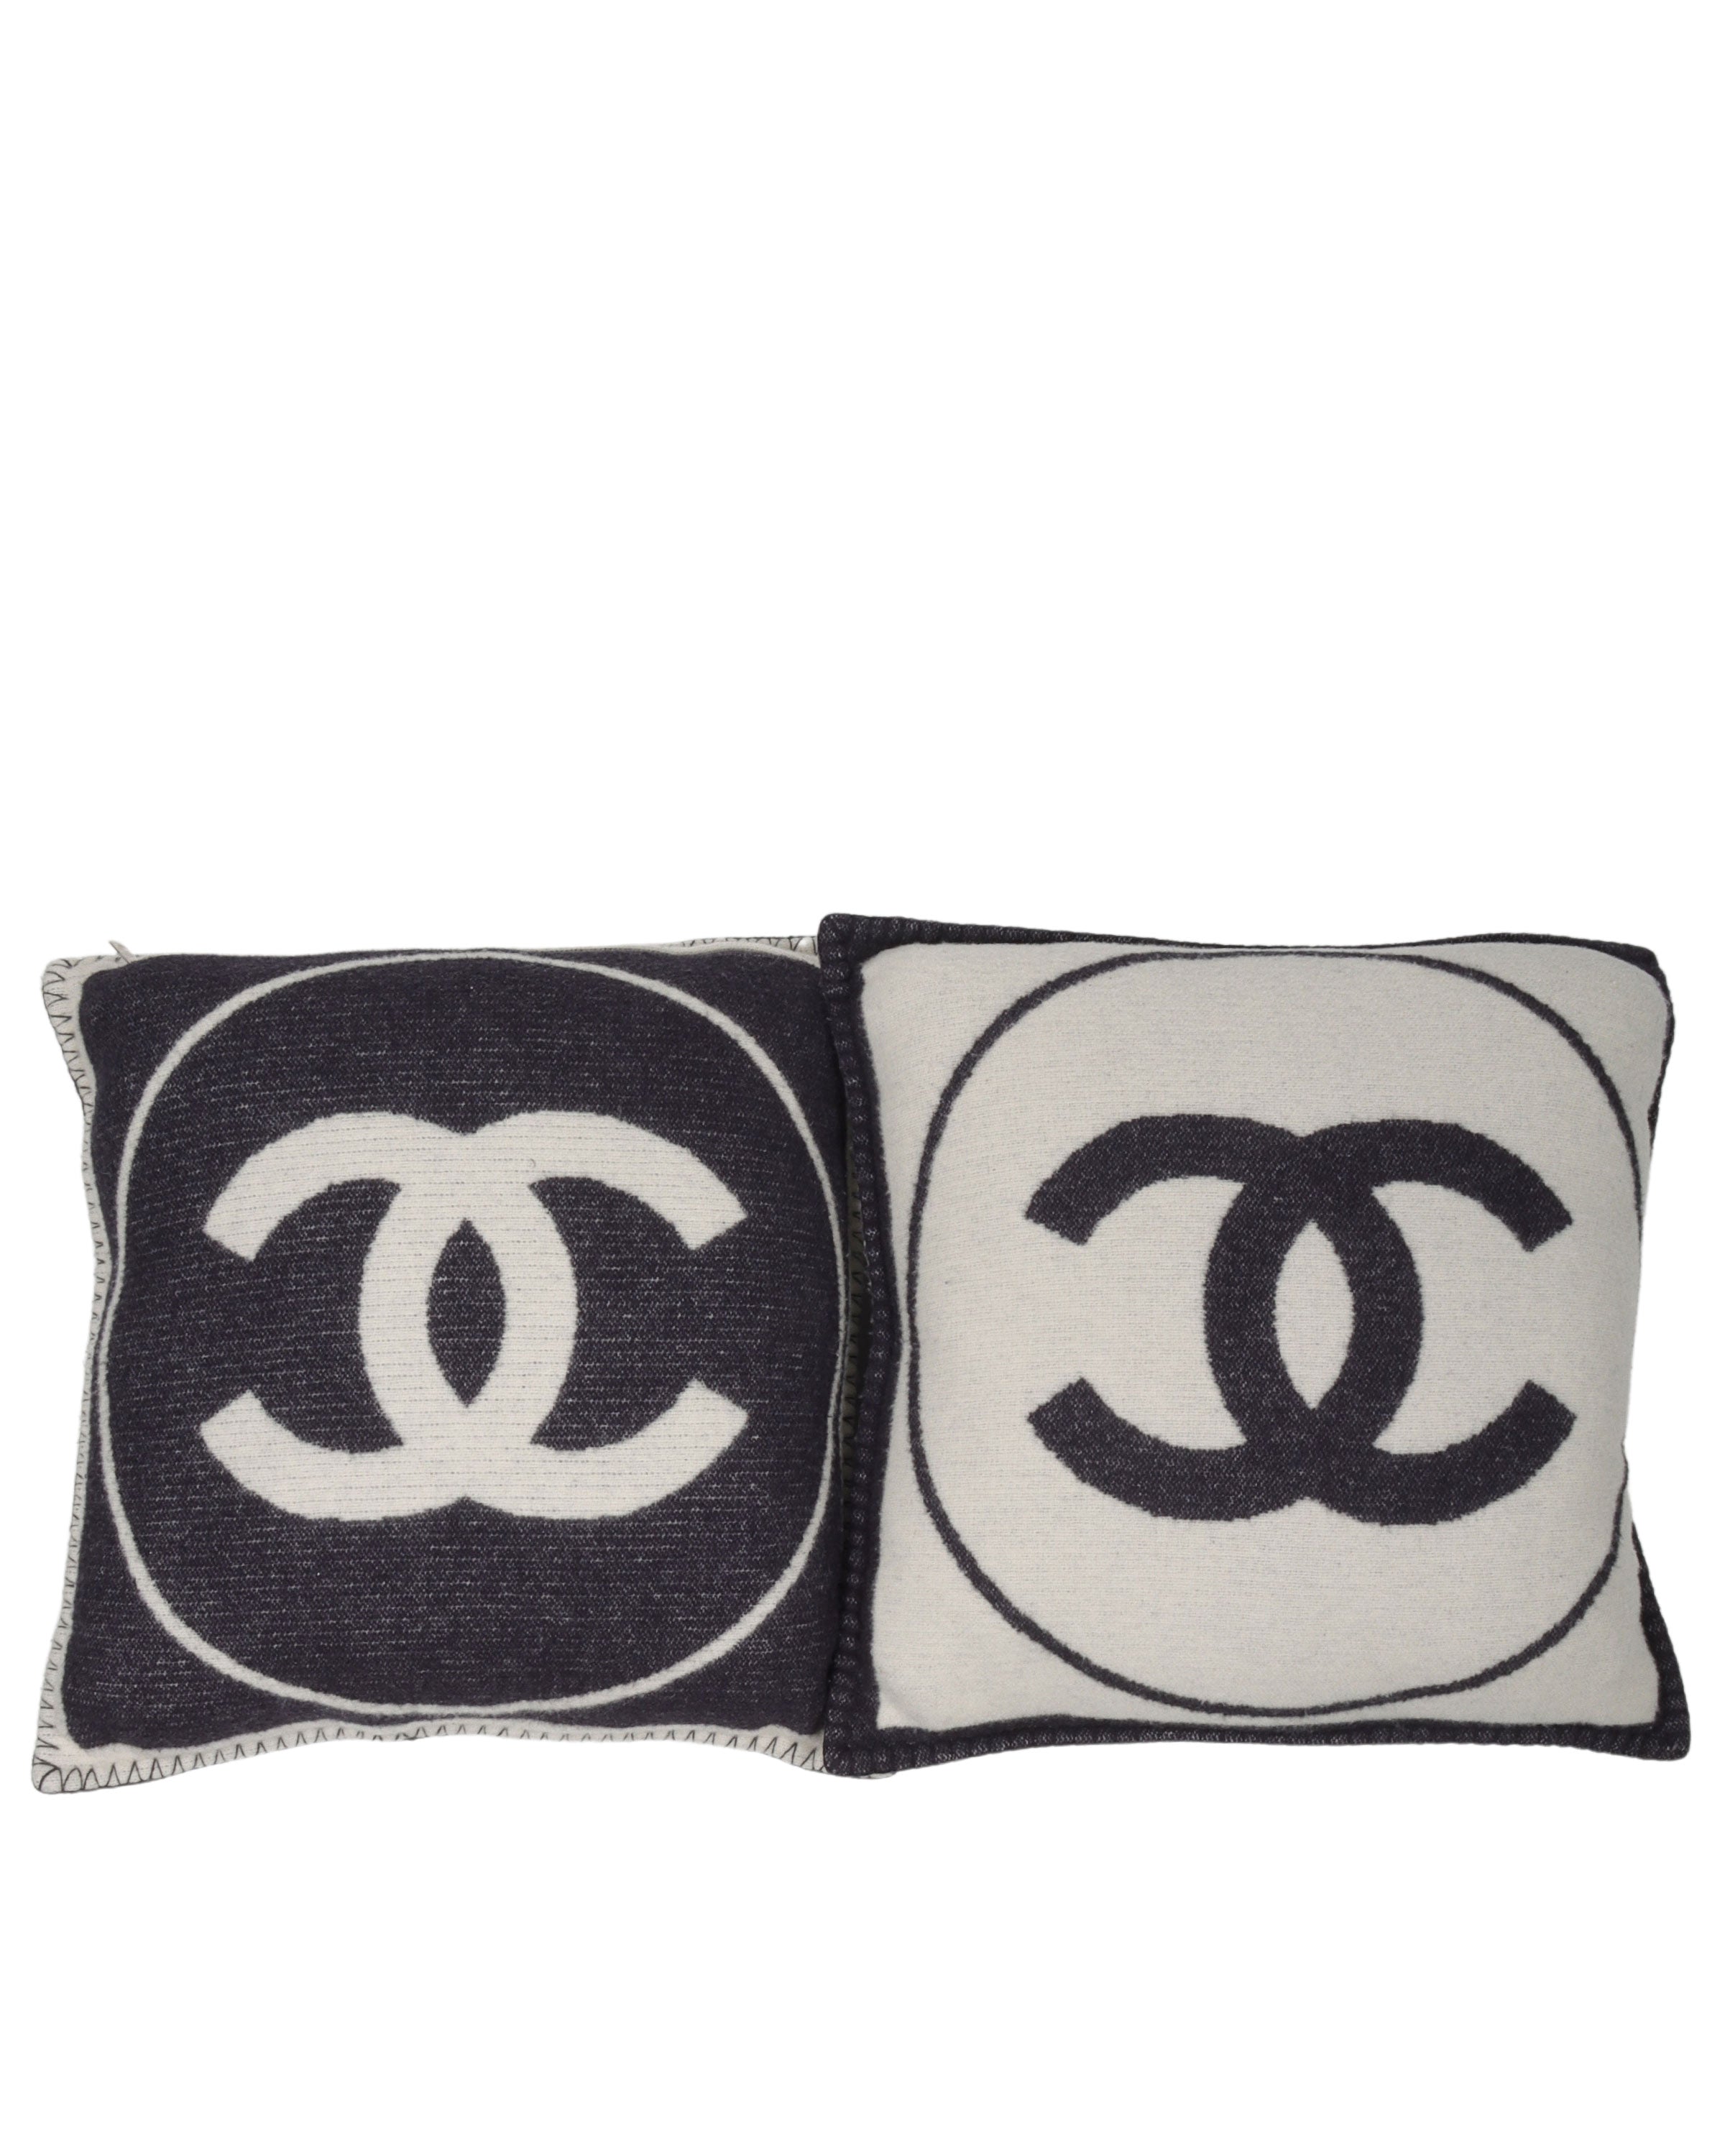 Chanel CC Wool Throw Pillow - Black Pillows, Pillows & Throws